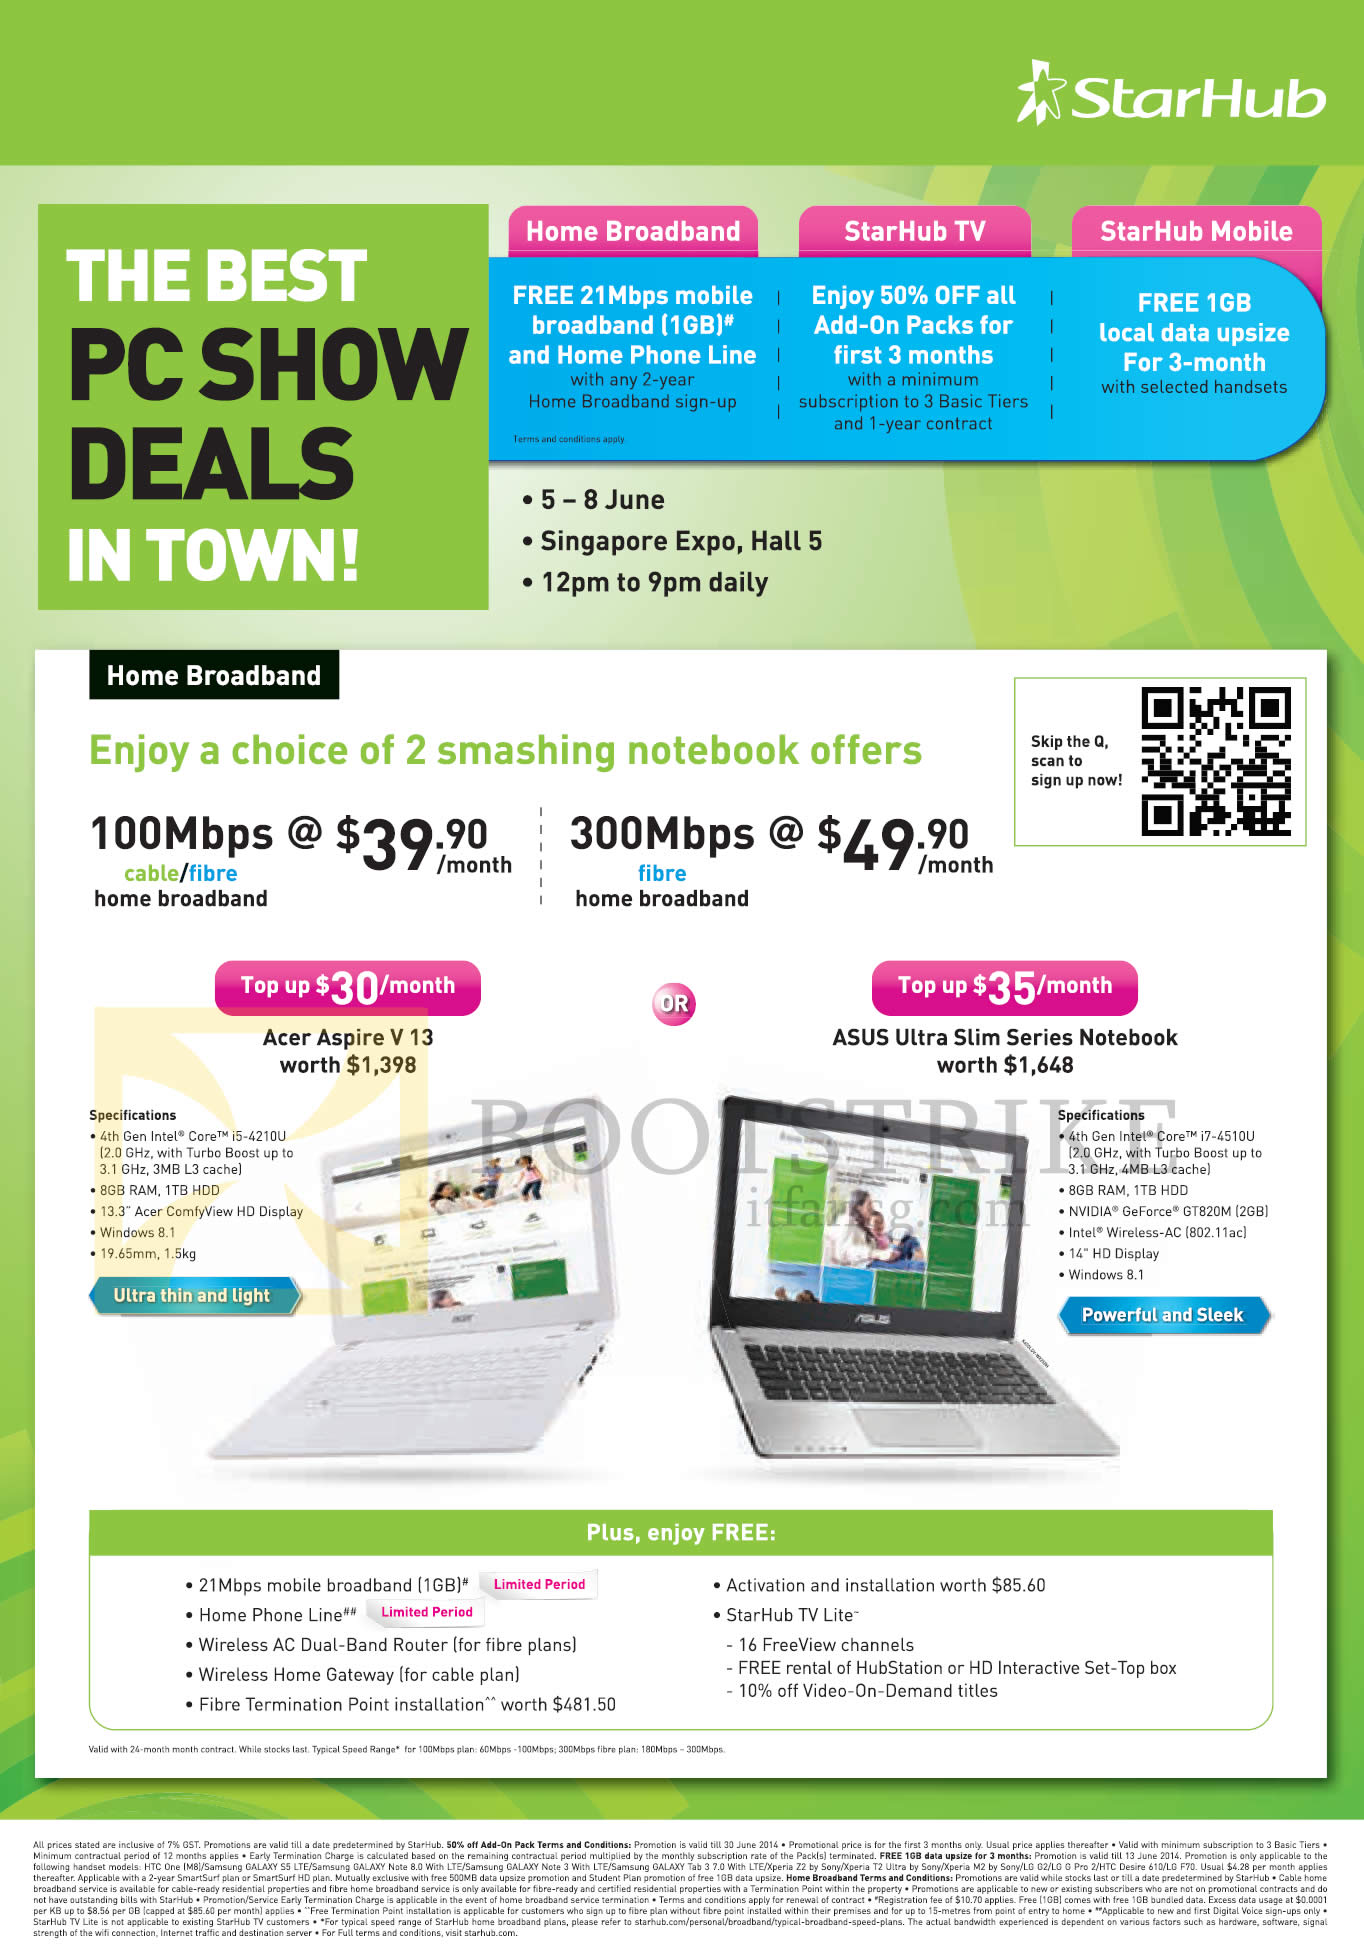 PC SHOW 2014 price list image brochure of Starhub Broadband Fibre 100Mbps 39.90, 300Mbps 49.90. Acer Aspire V13 Notebook, ASUS Ultra Slim Series